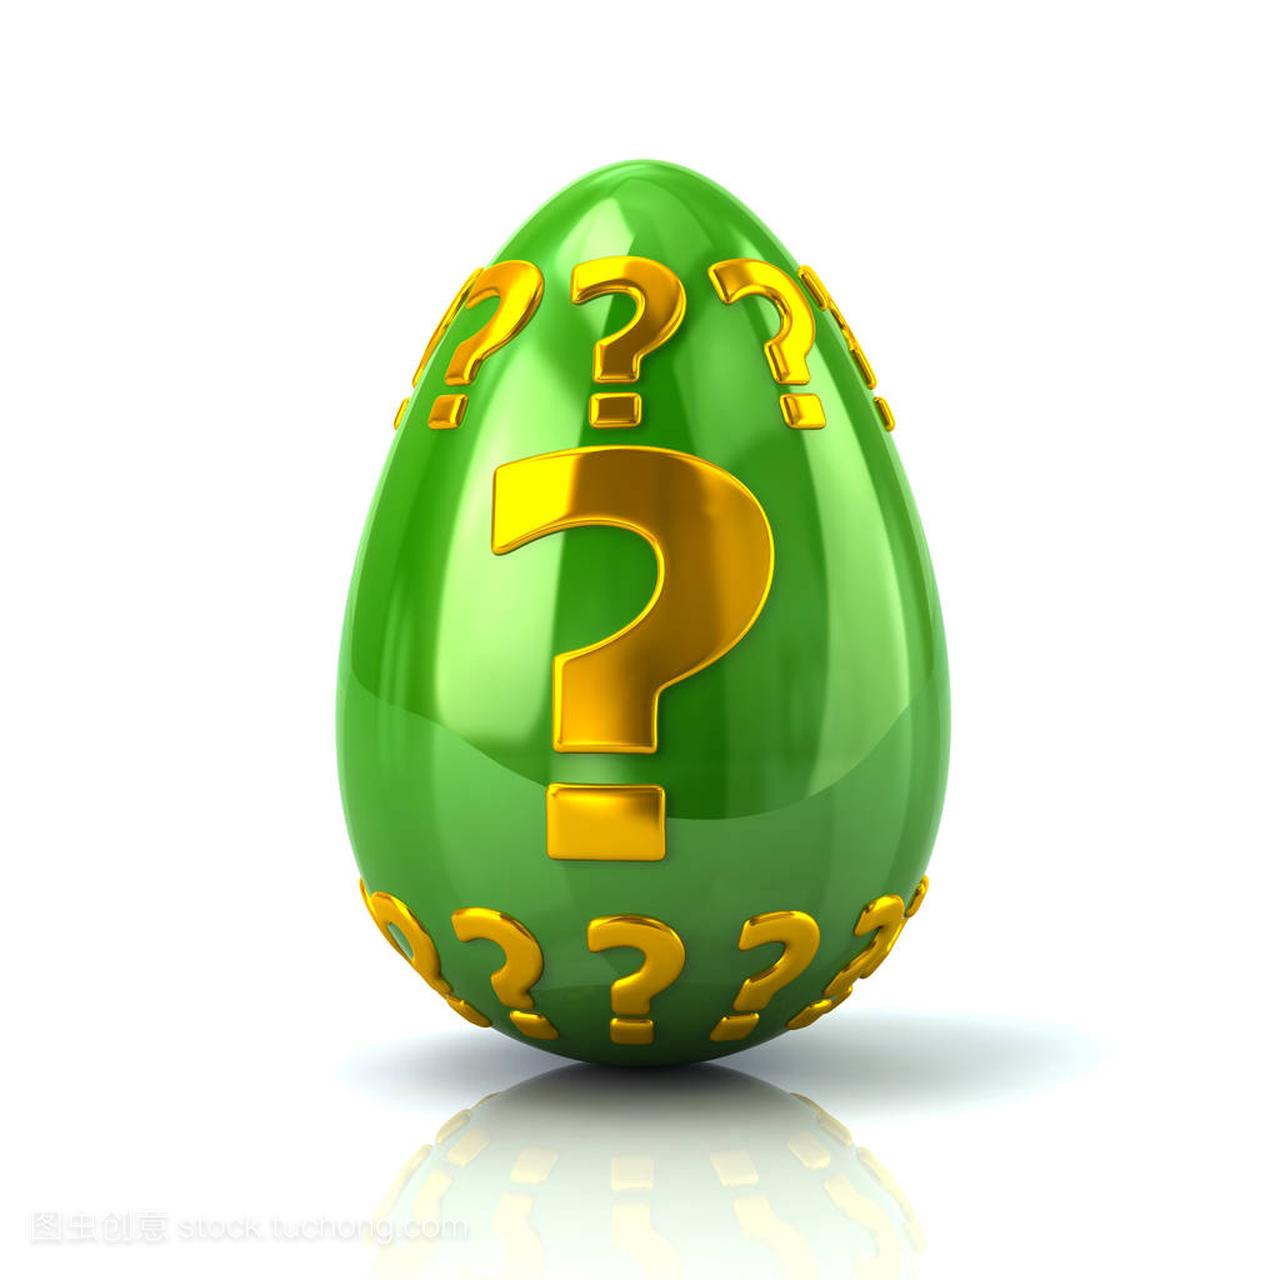 Green Easter egg with question mark, 3d illustr